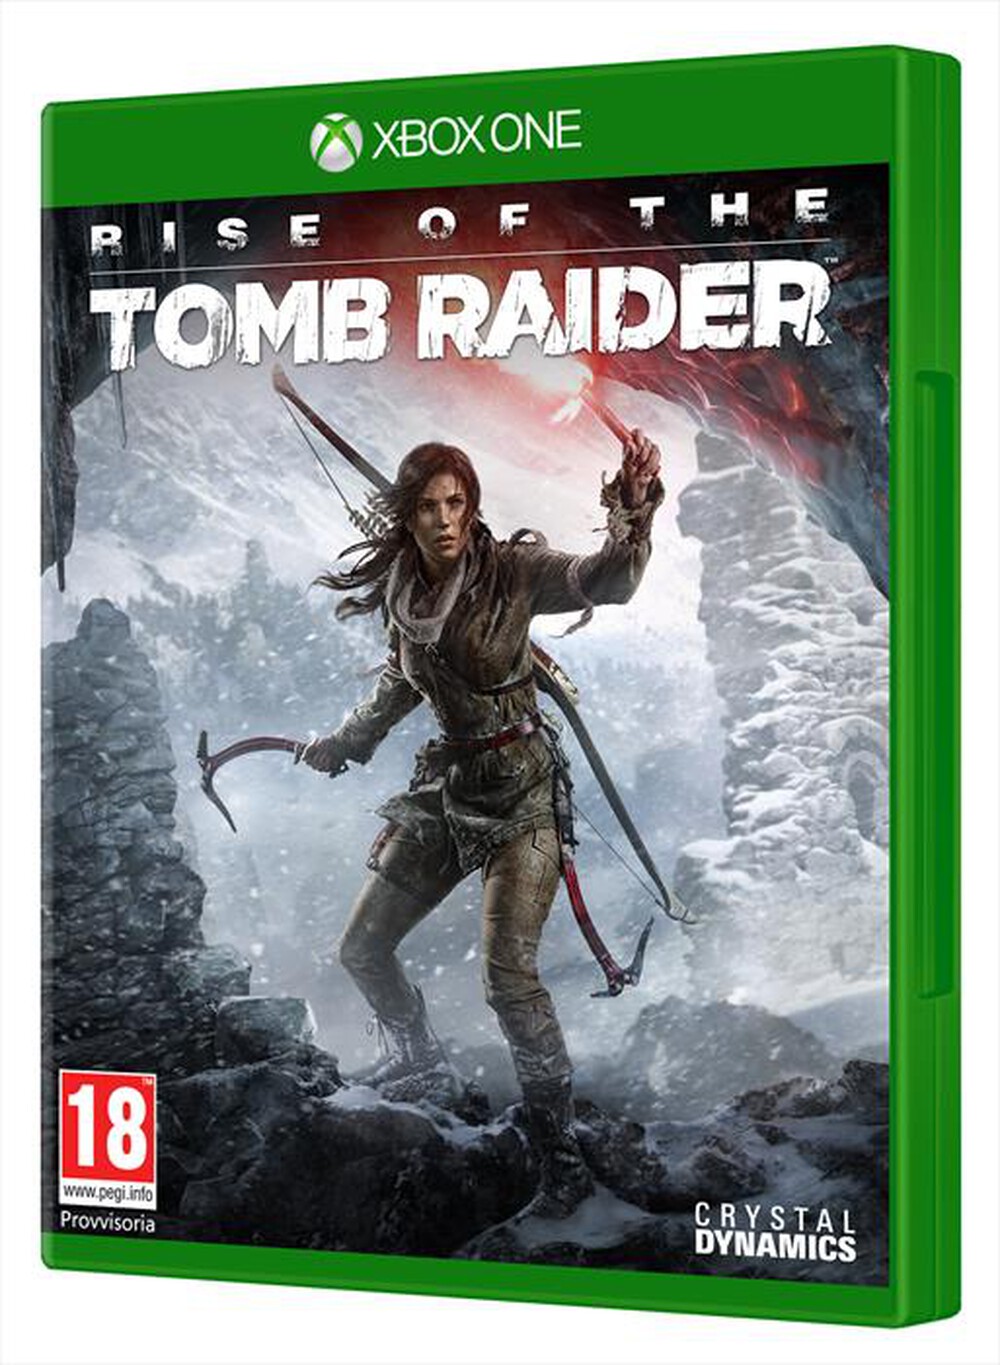 "MICROSOFT - Rise of the Tomb Raider Xbox One"